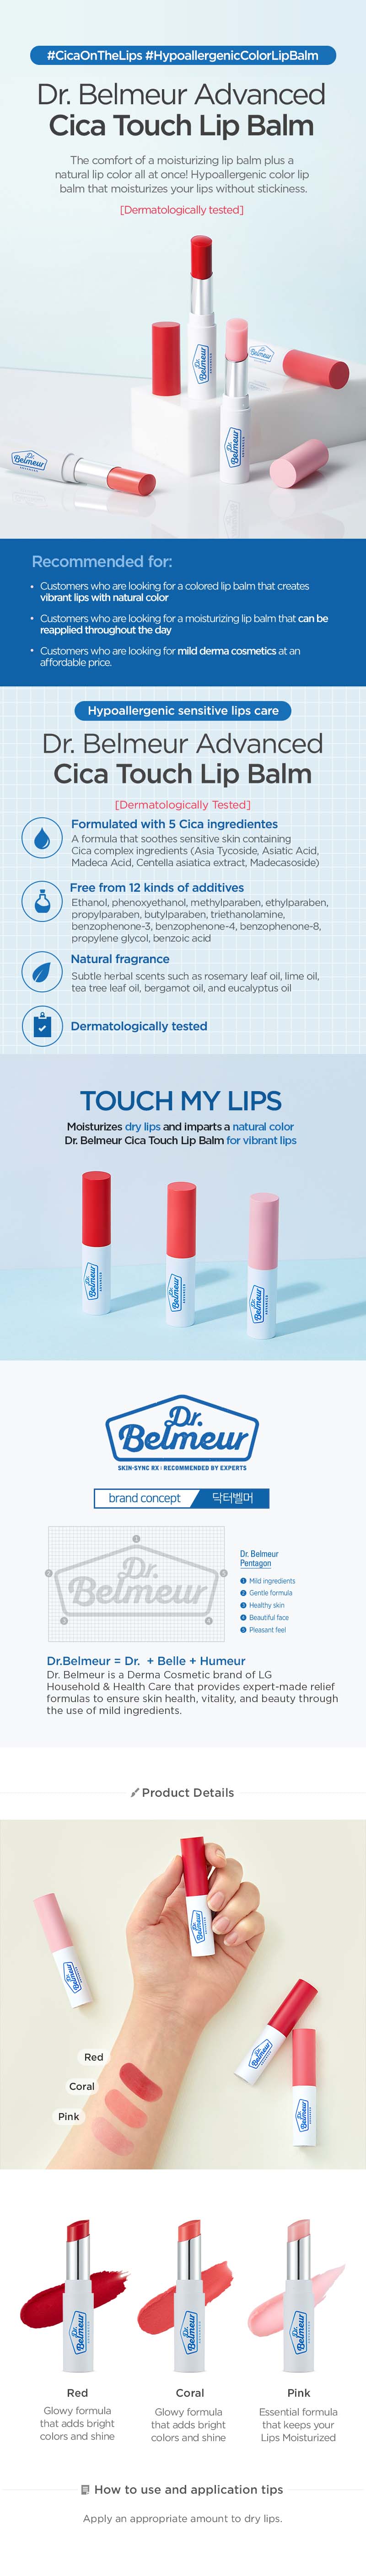 Dr Belmeur Advanced Cica Touch Lip Balm_Coral